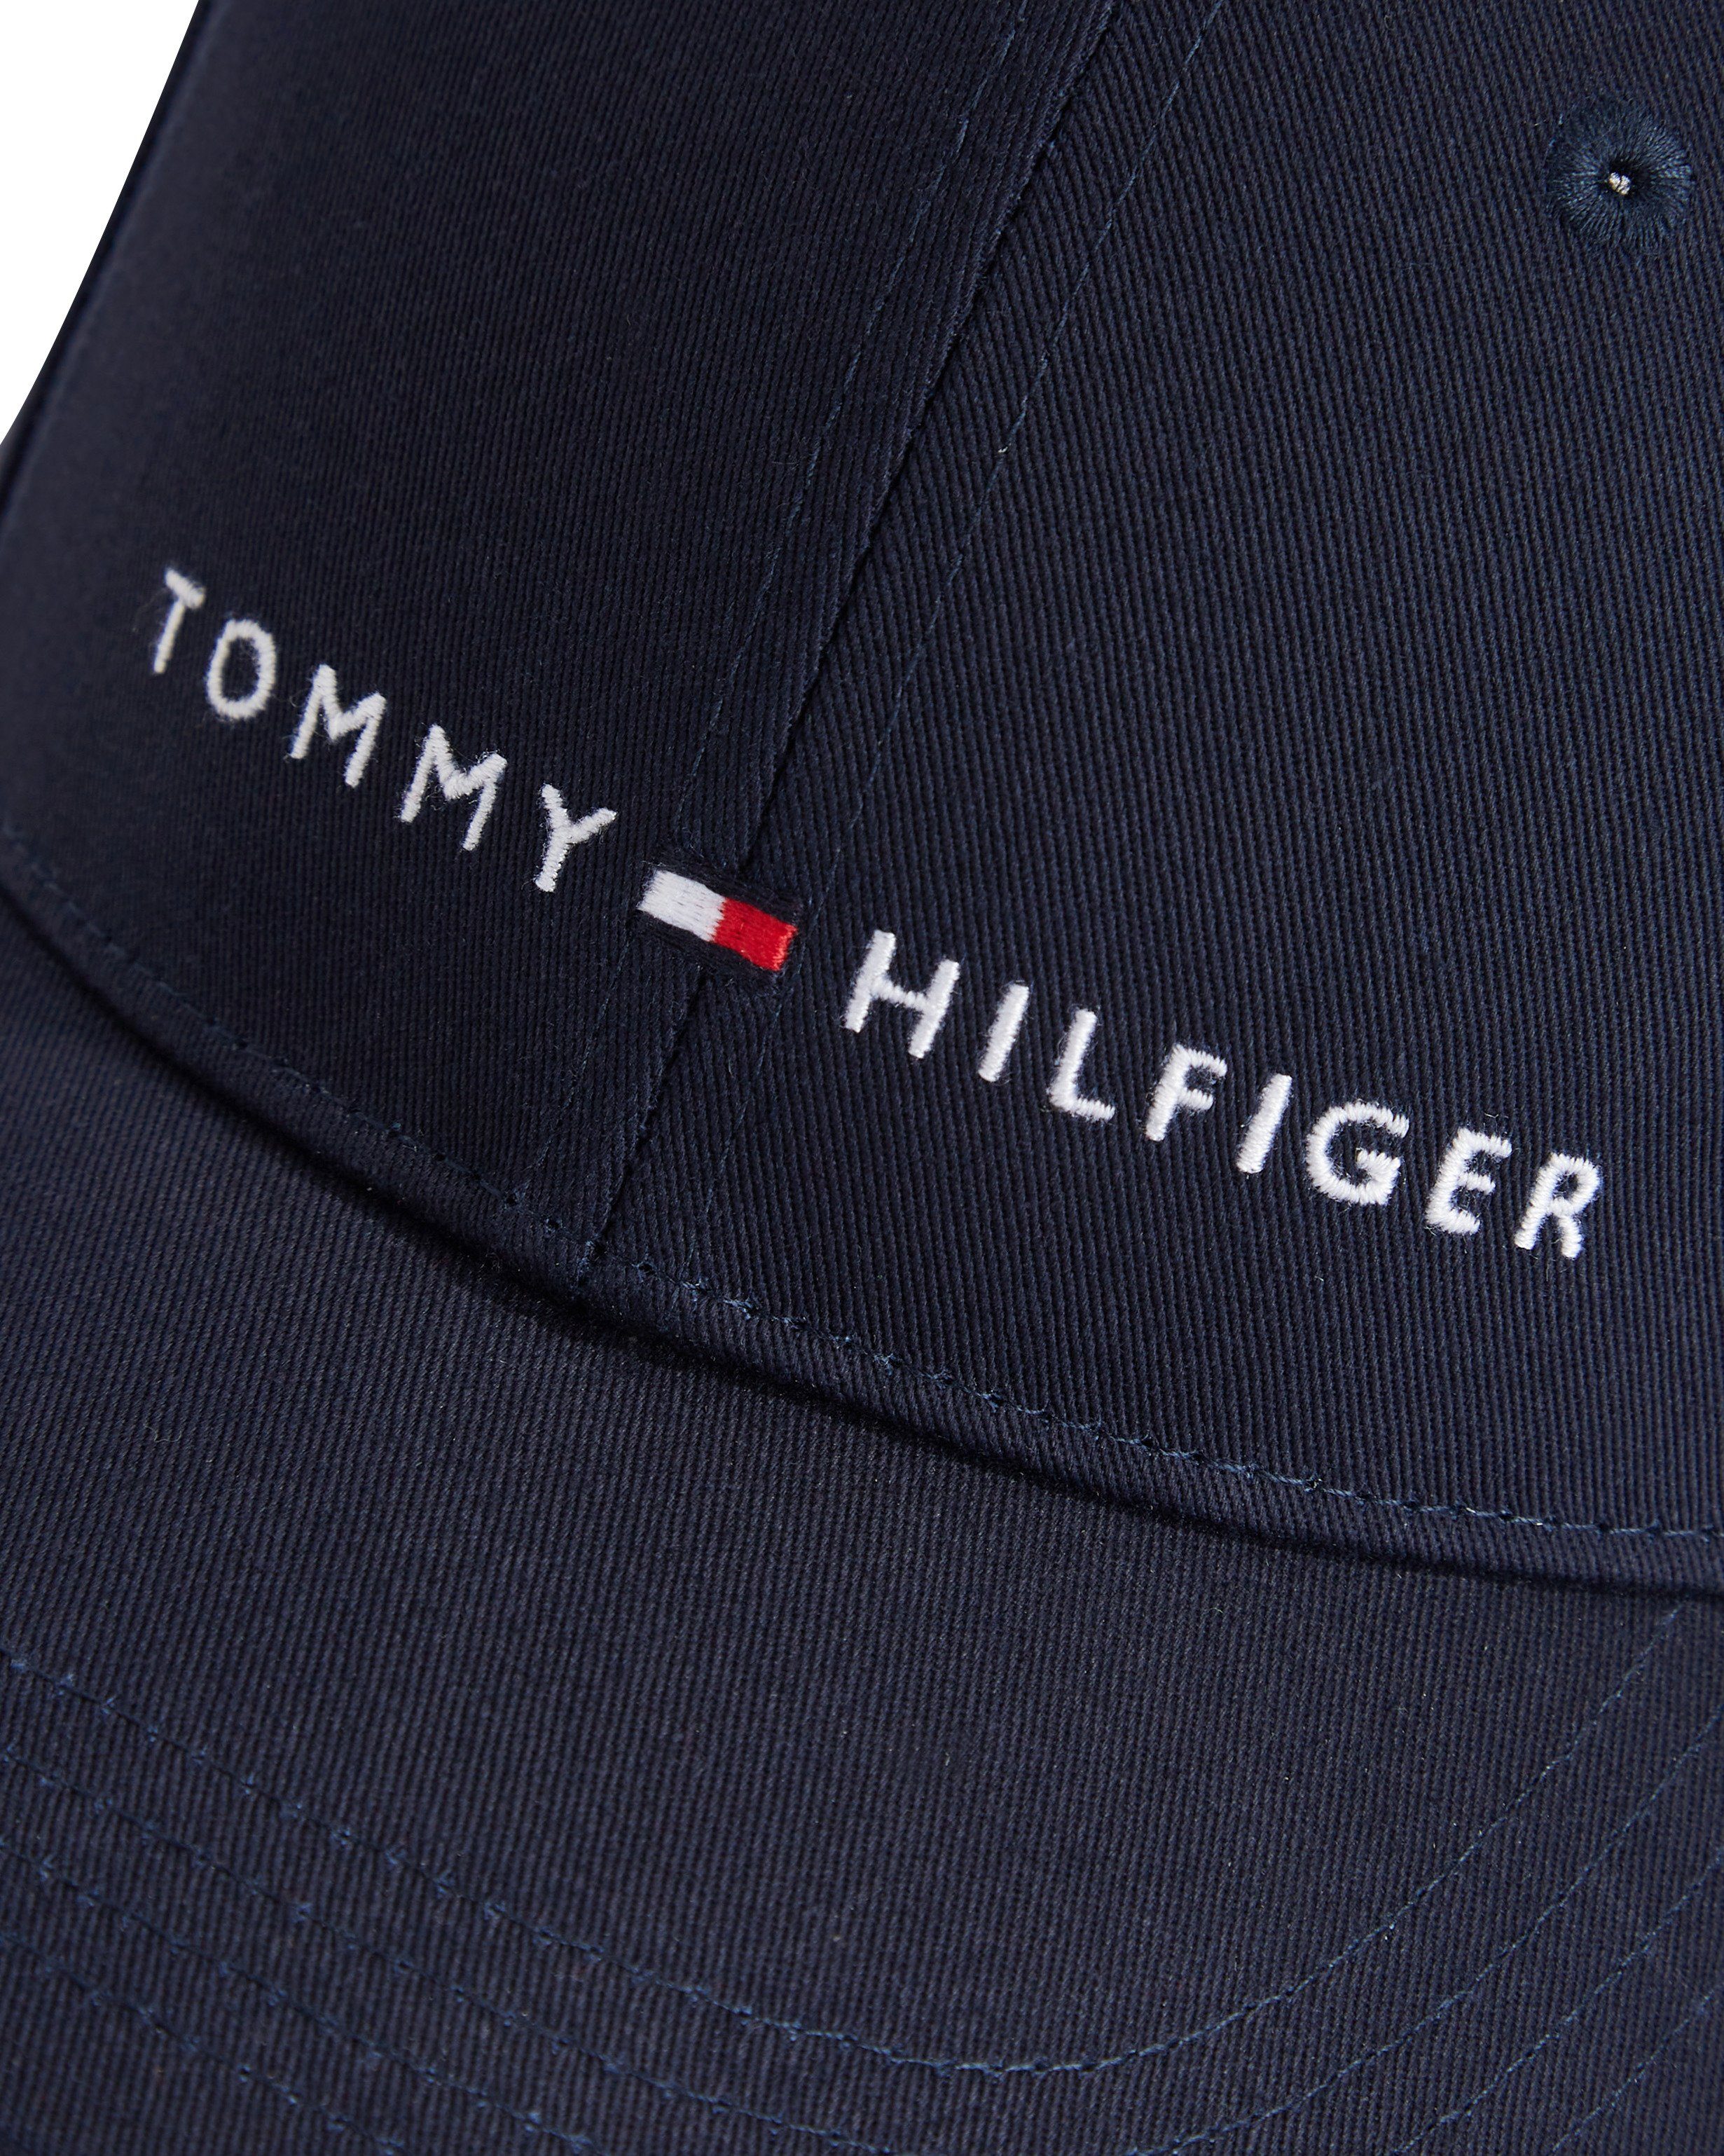 Kinder verstellbare Snapback Cap navy Cap mit Tommy Essential Hilfiger Branding